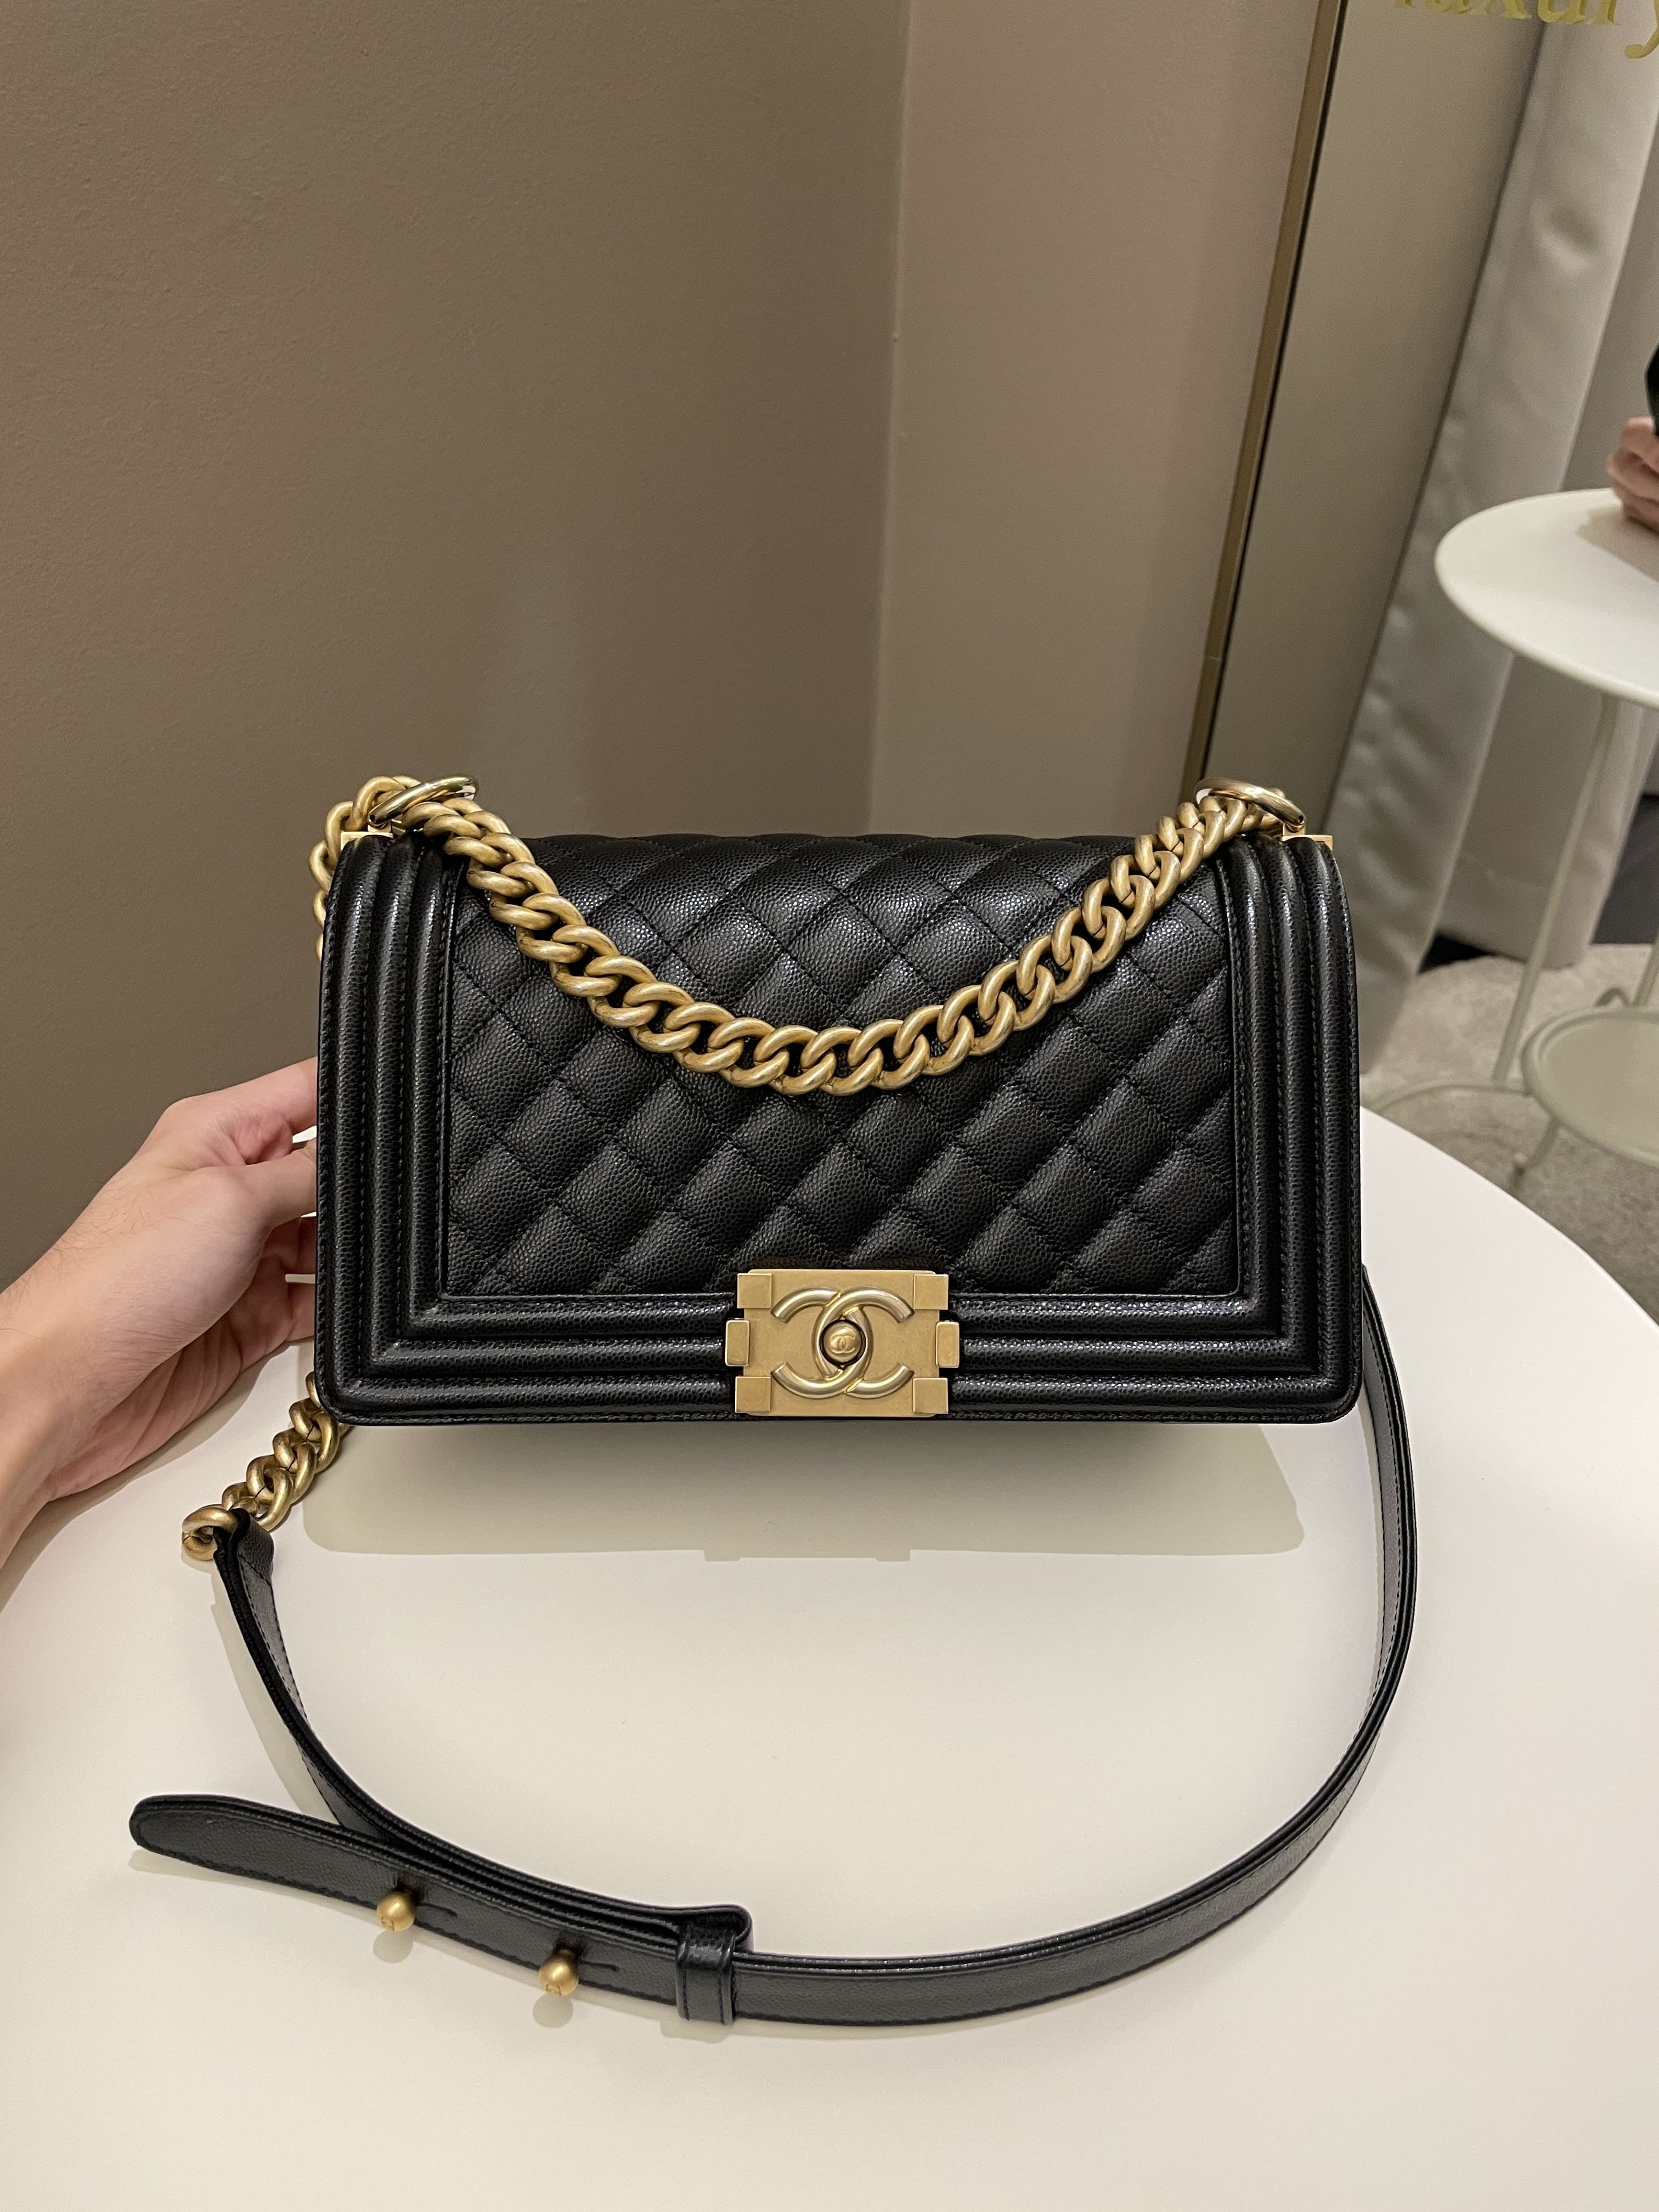 Handbags Chanel Chanel Womens North South Boy Bag Black Caviar Leather / Gold